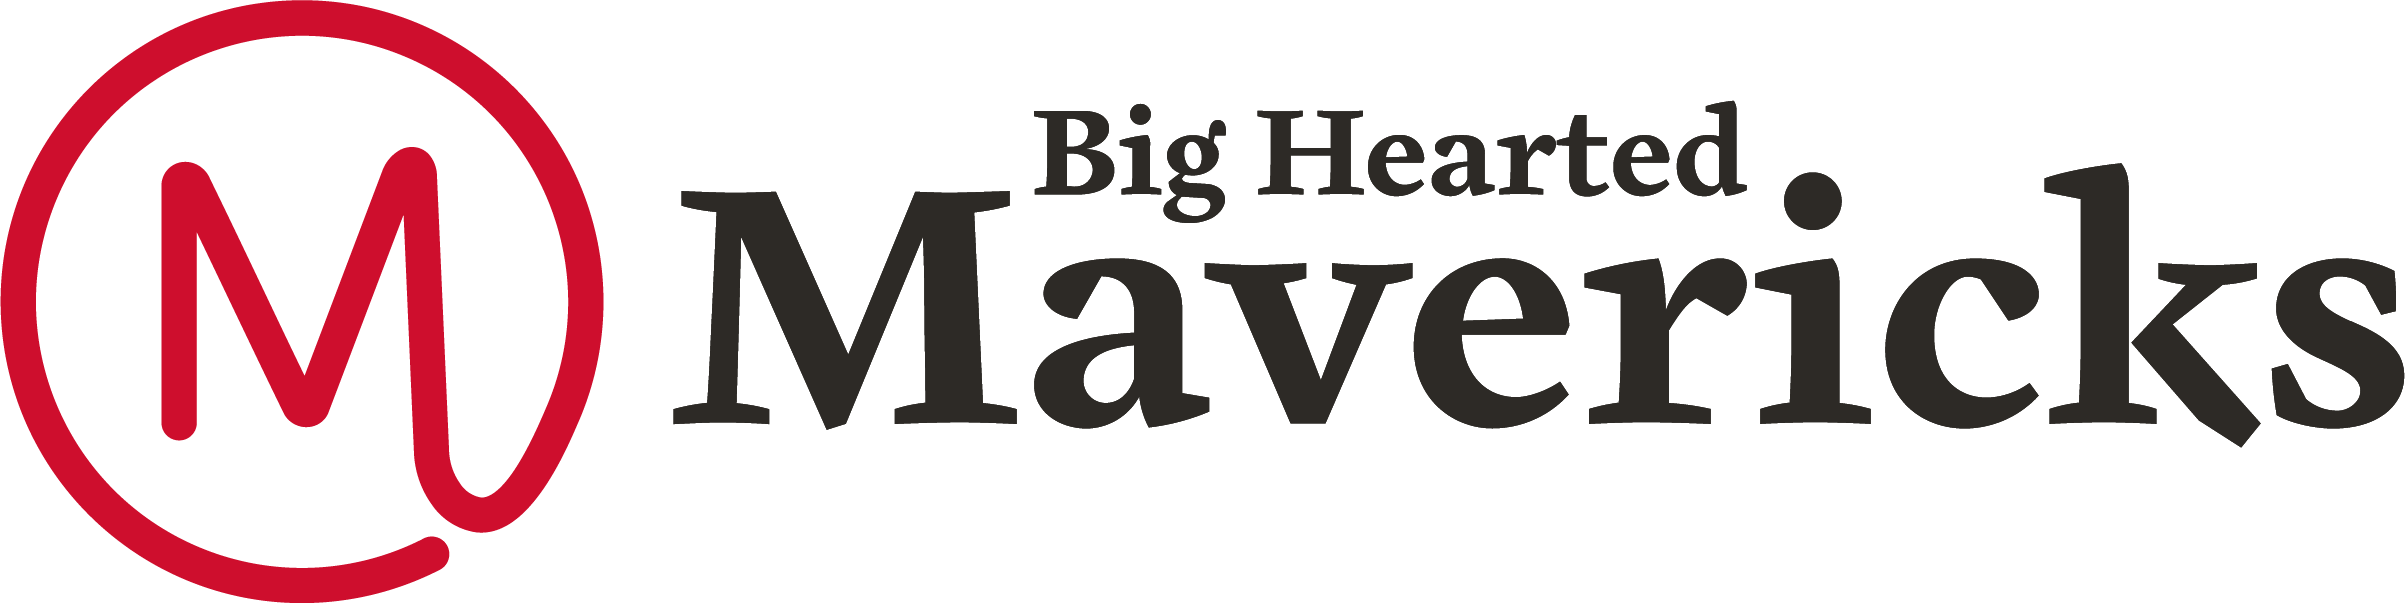 Big Hearted Mavericks